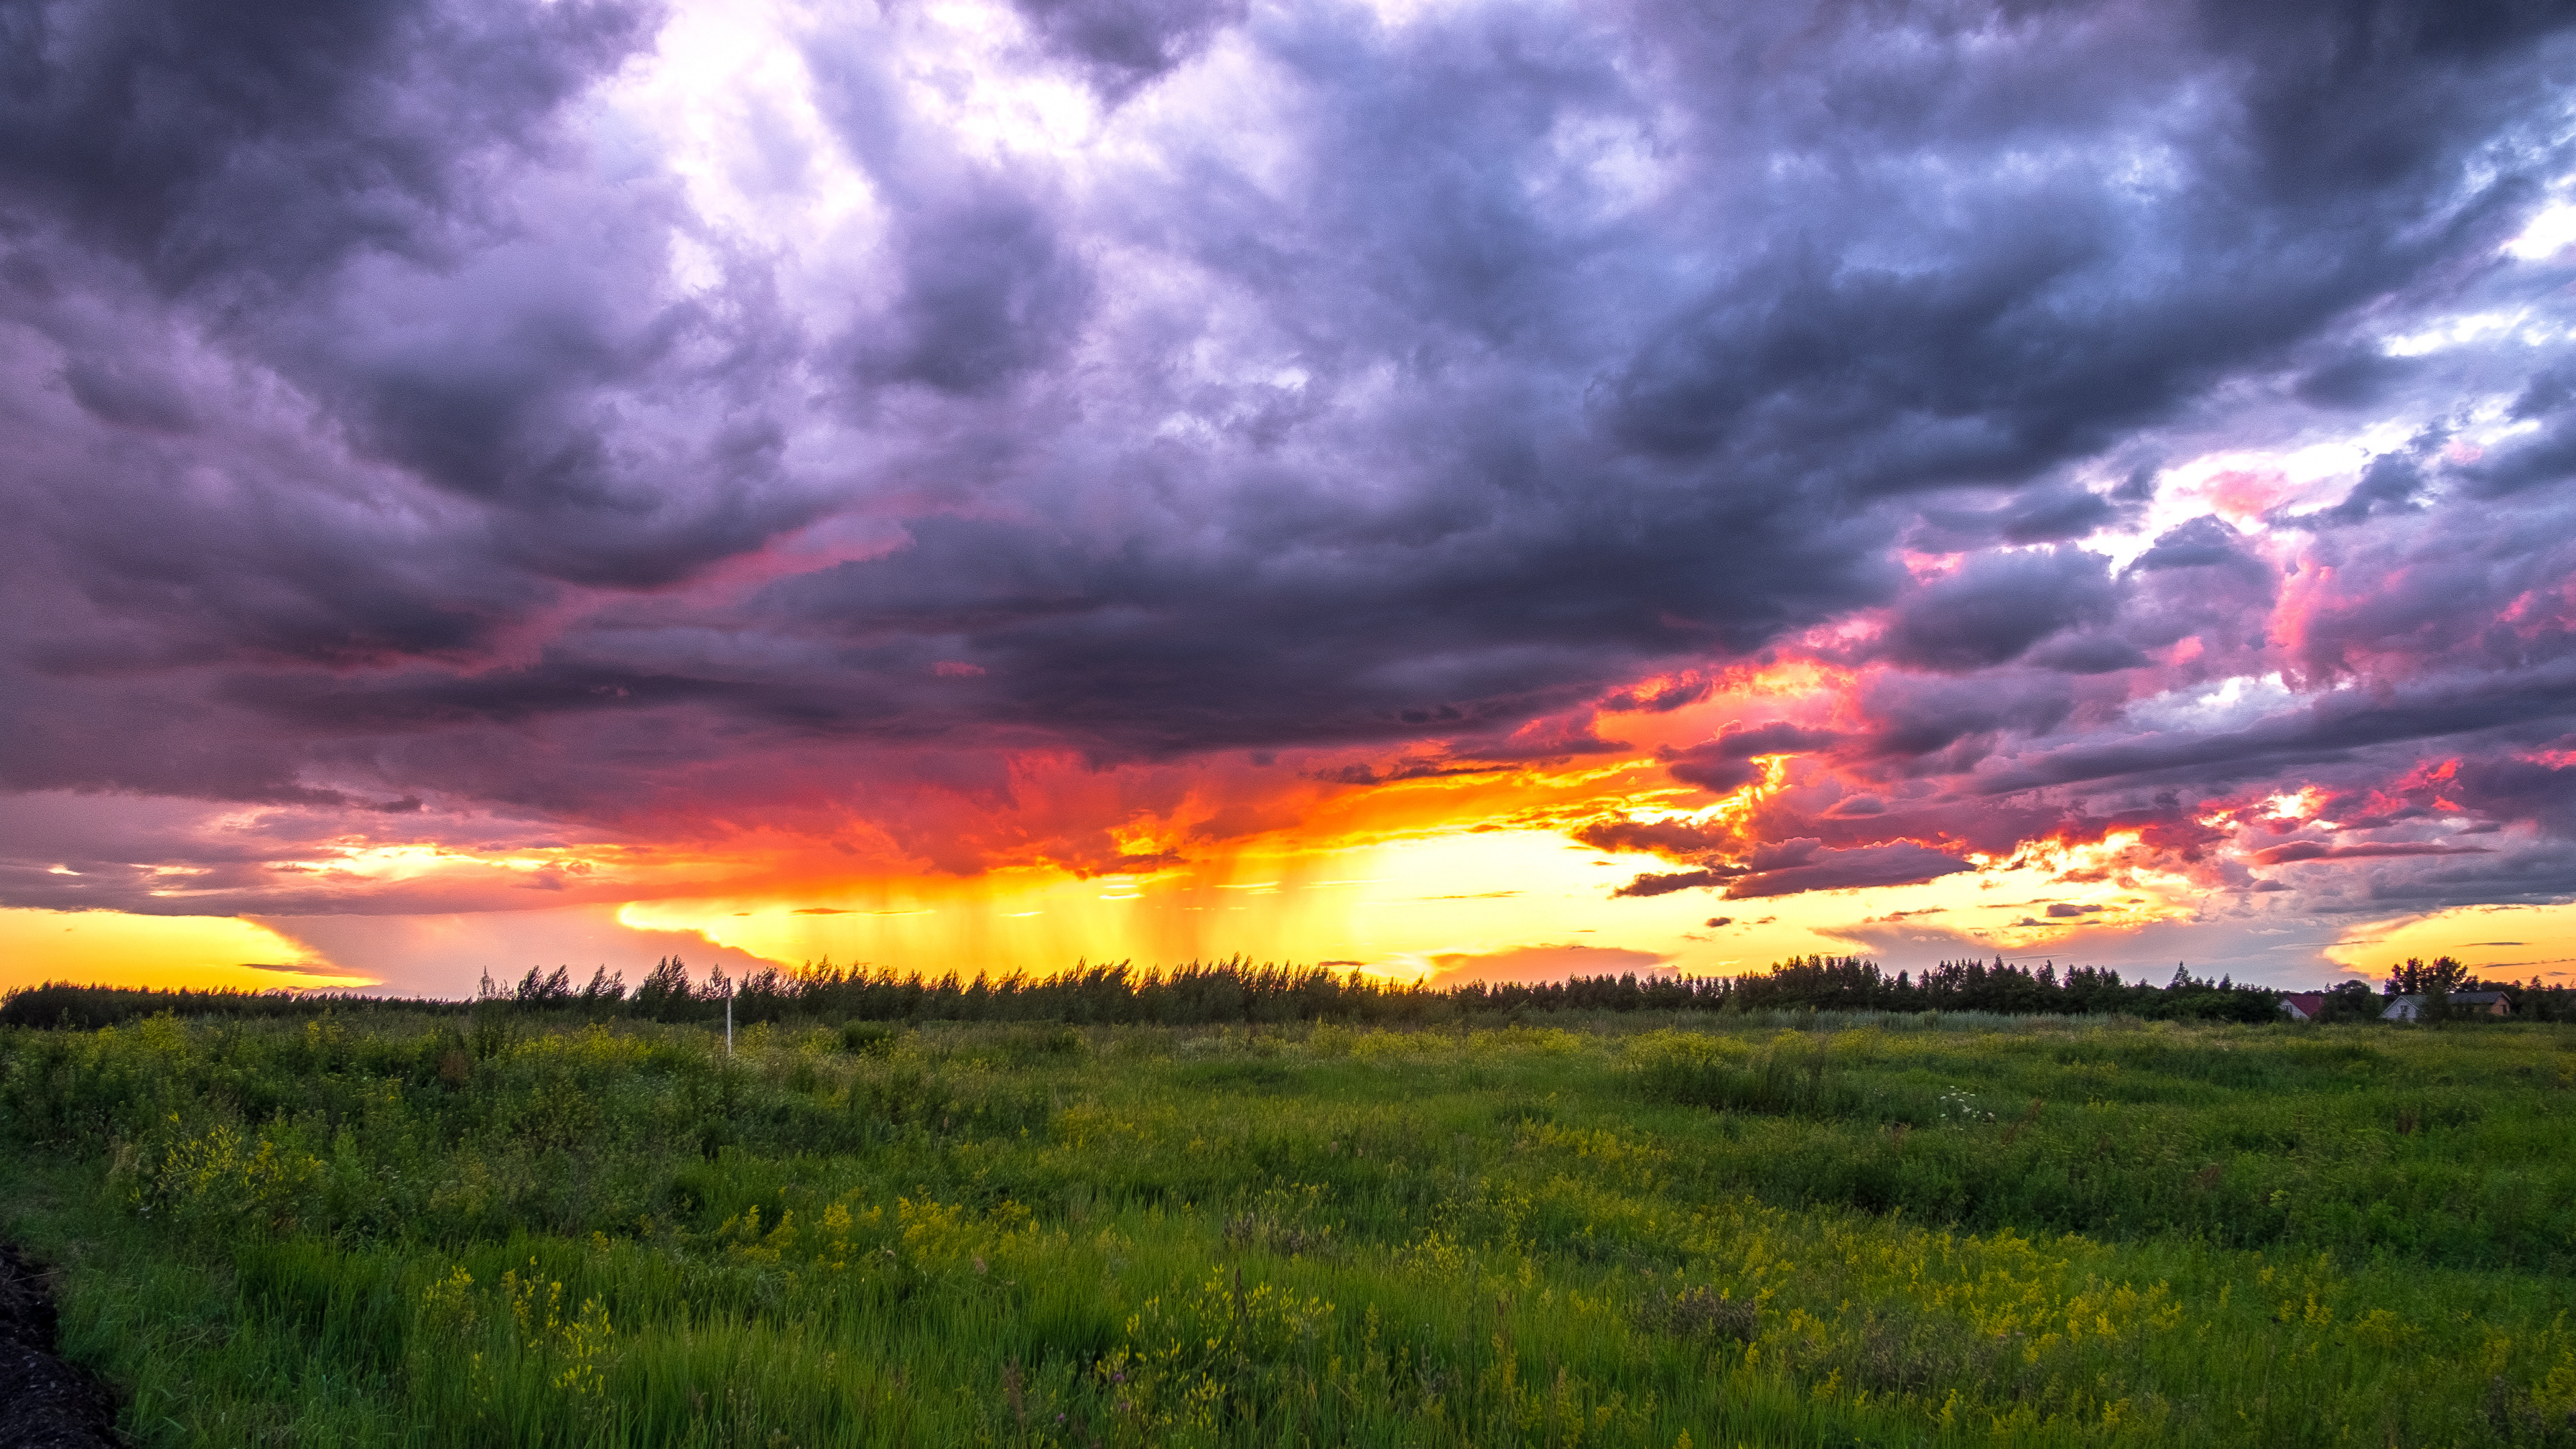 Green Grass Field Under Cloudy Sky During Sunset. Wallpaper in 3840x2160 Resolution